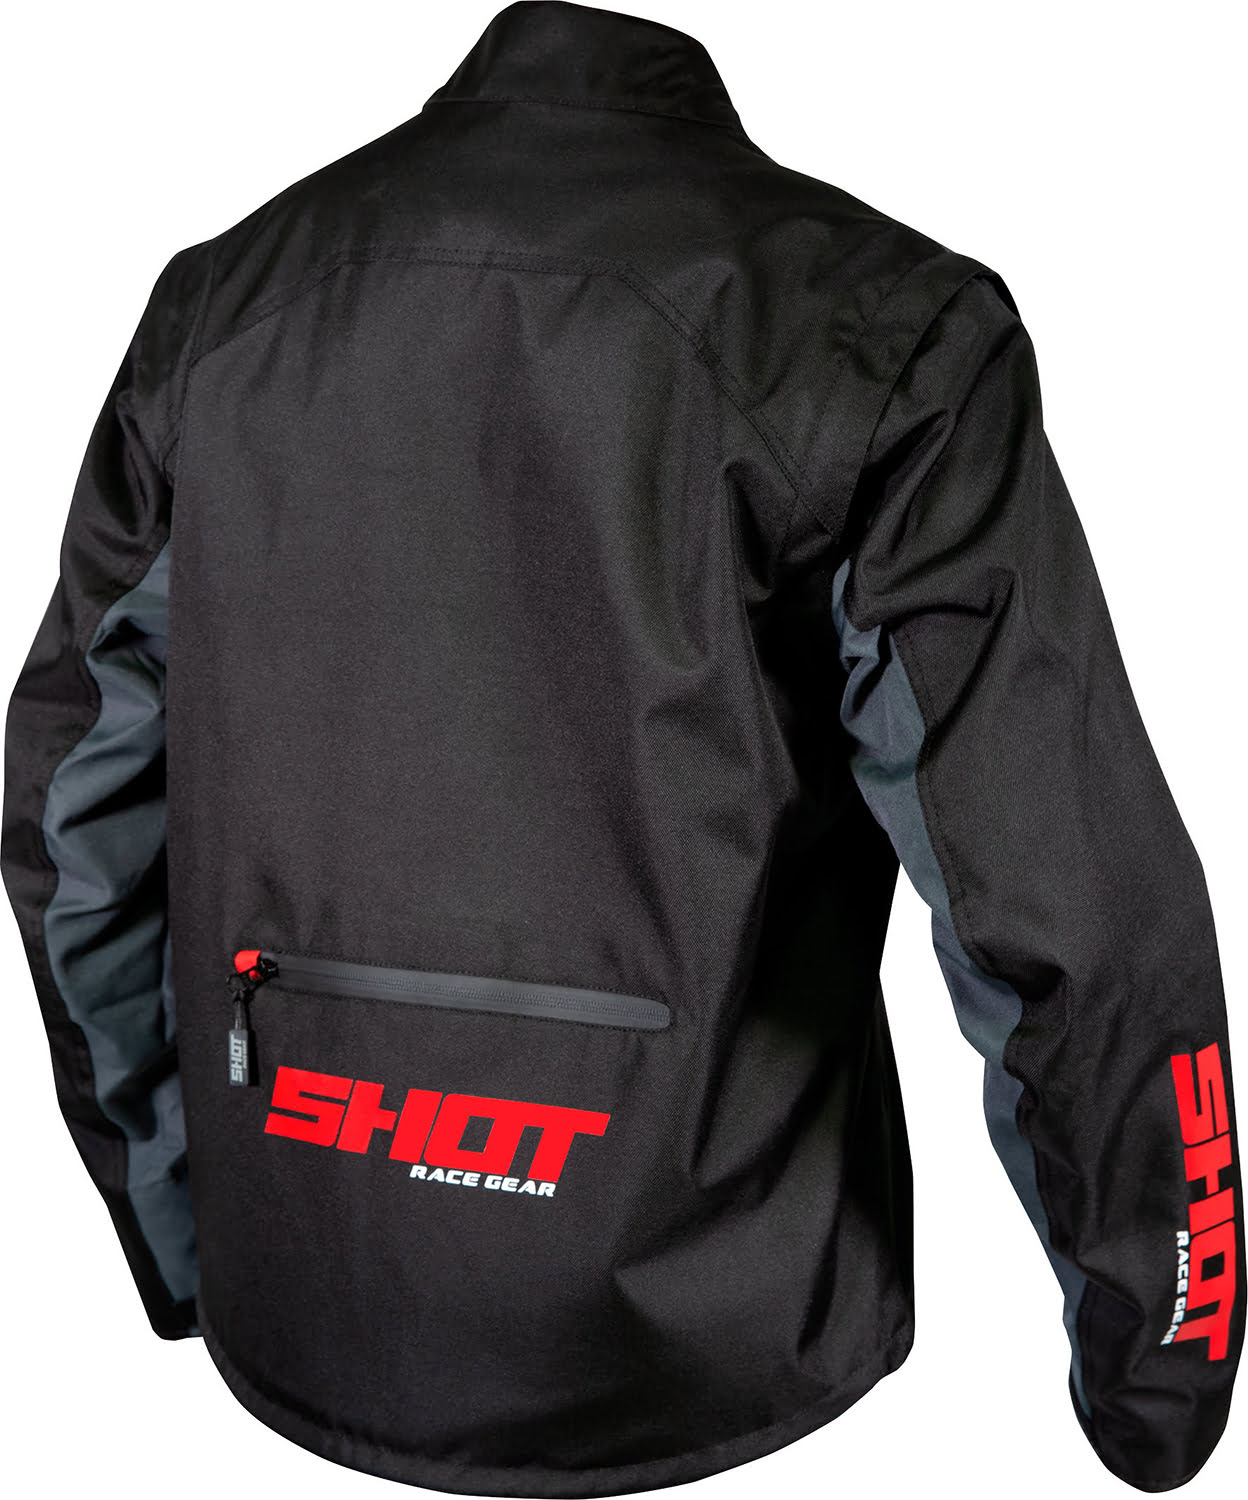 Jacket CONTACT ASSAULT BLACK / RED SHOT 